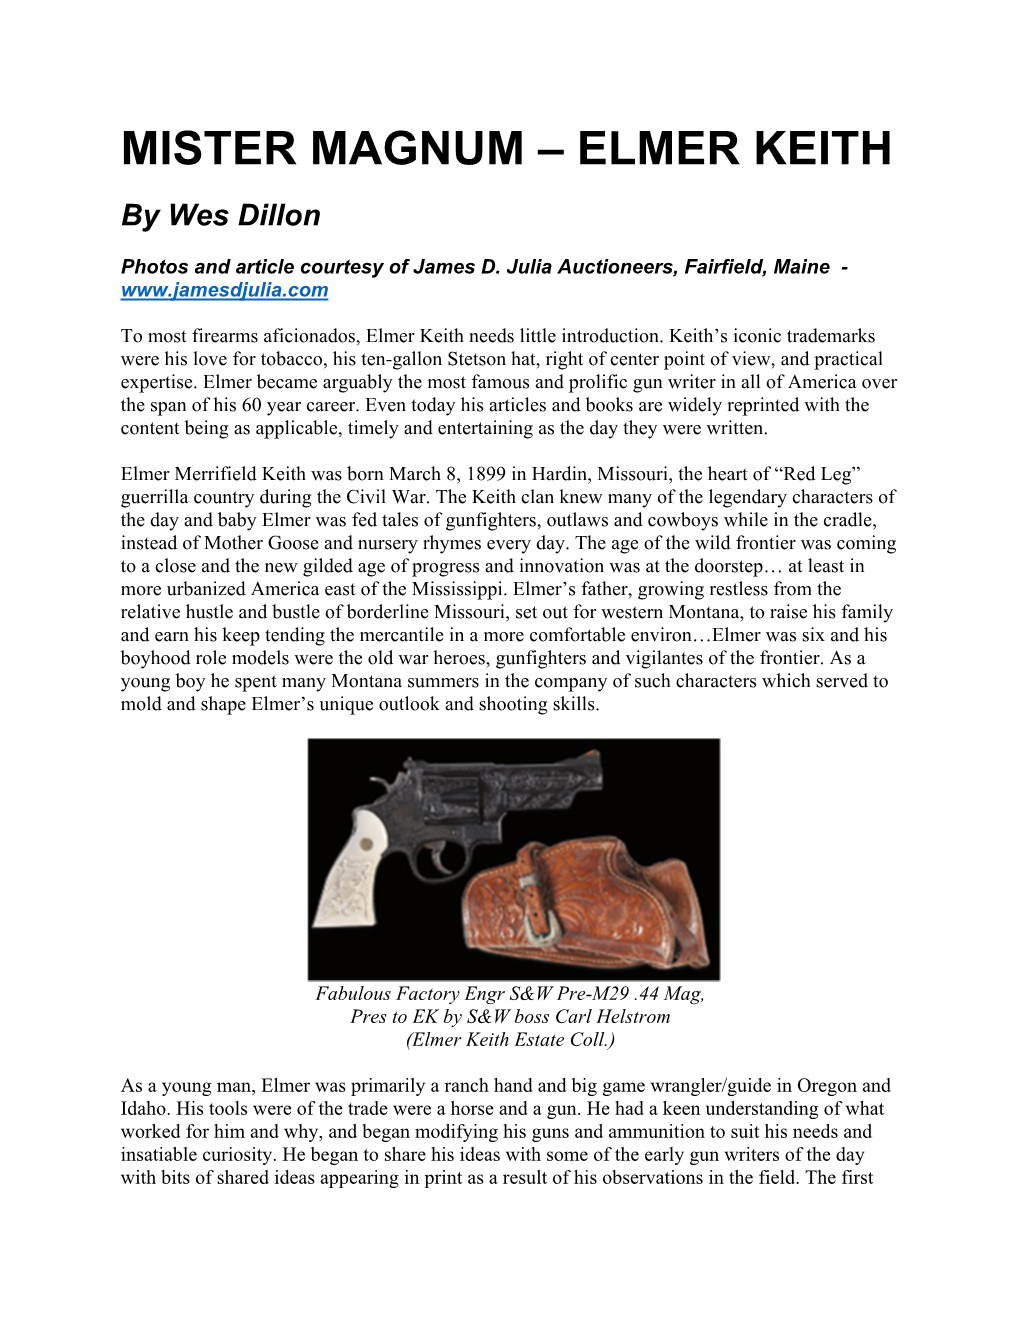 Mister Magnum – Elmer Keith